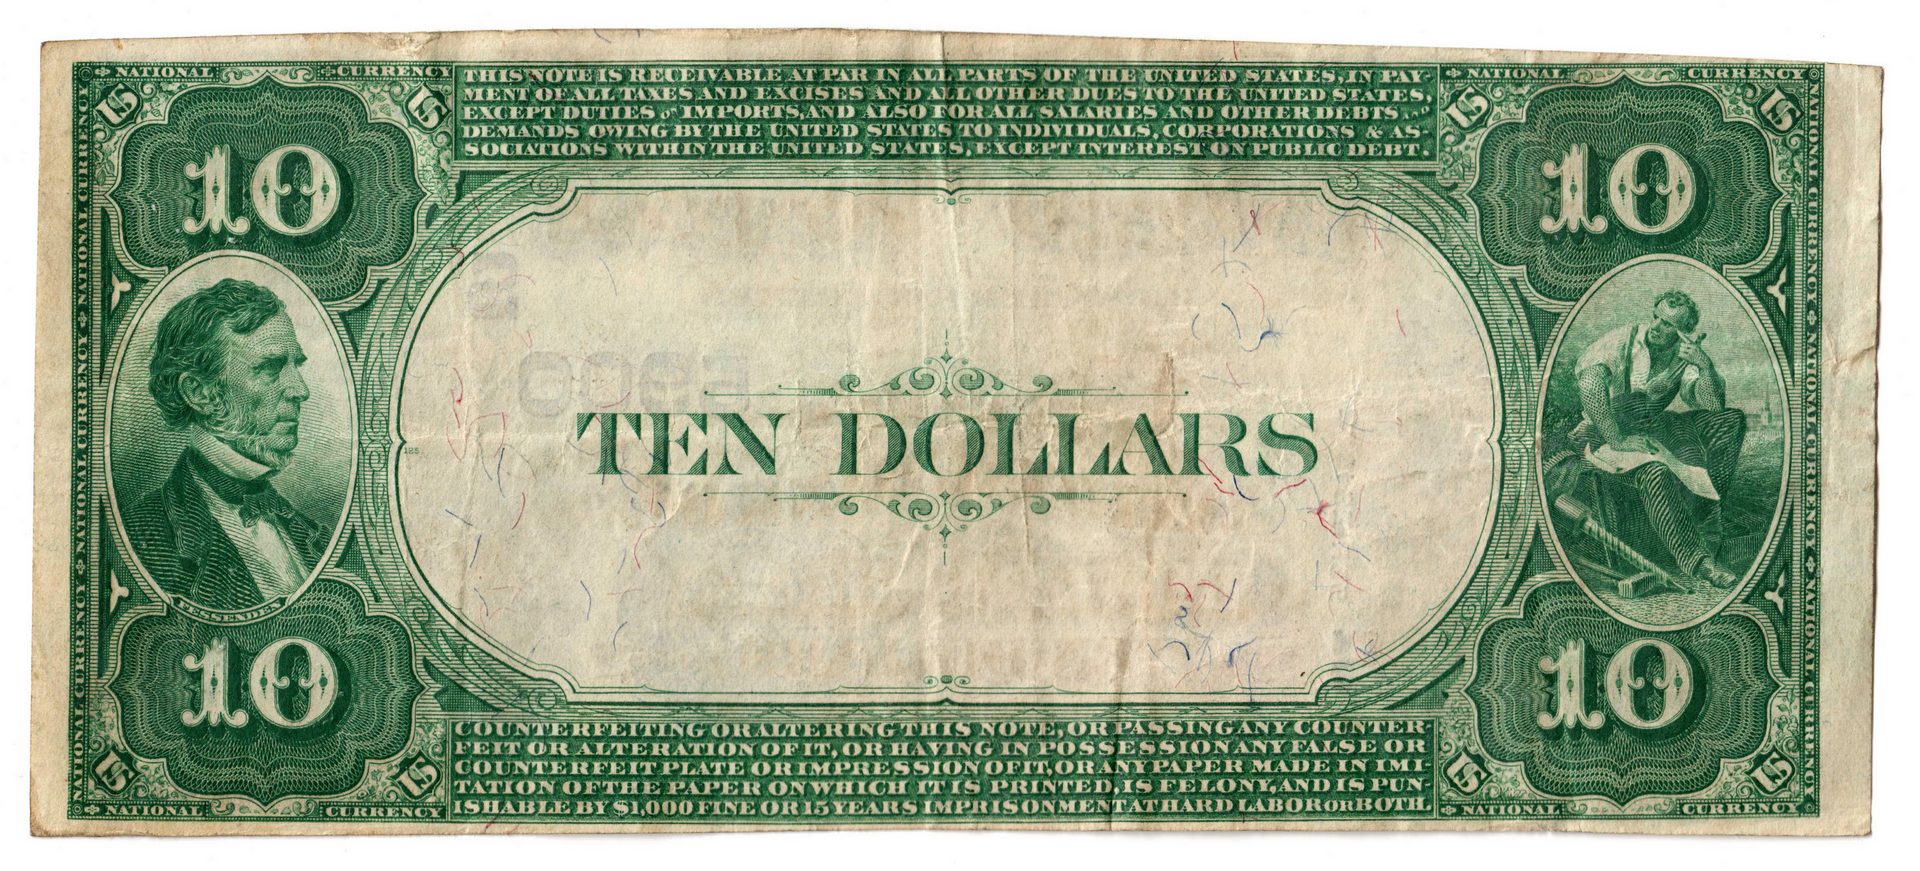 Lot 78: 1882 $10 Citizens National Bank, Bowling Green Nat